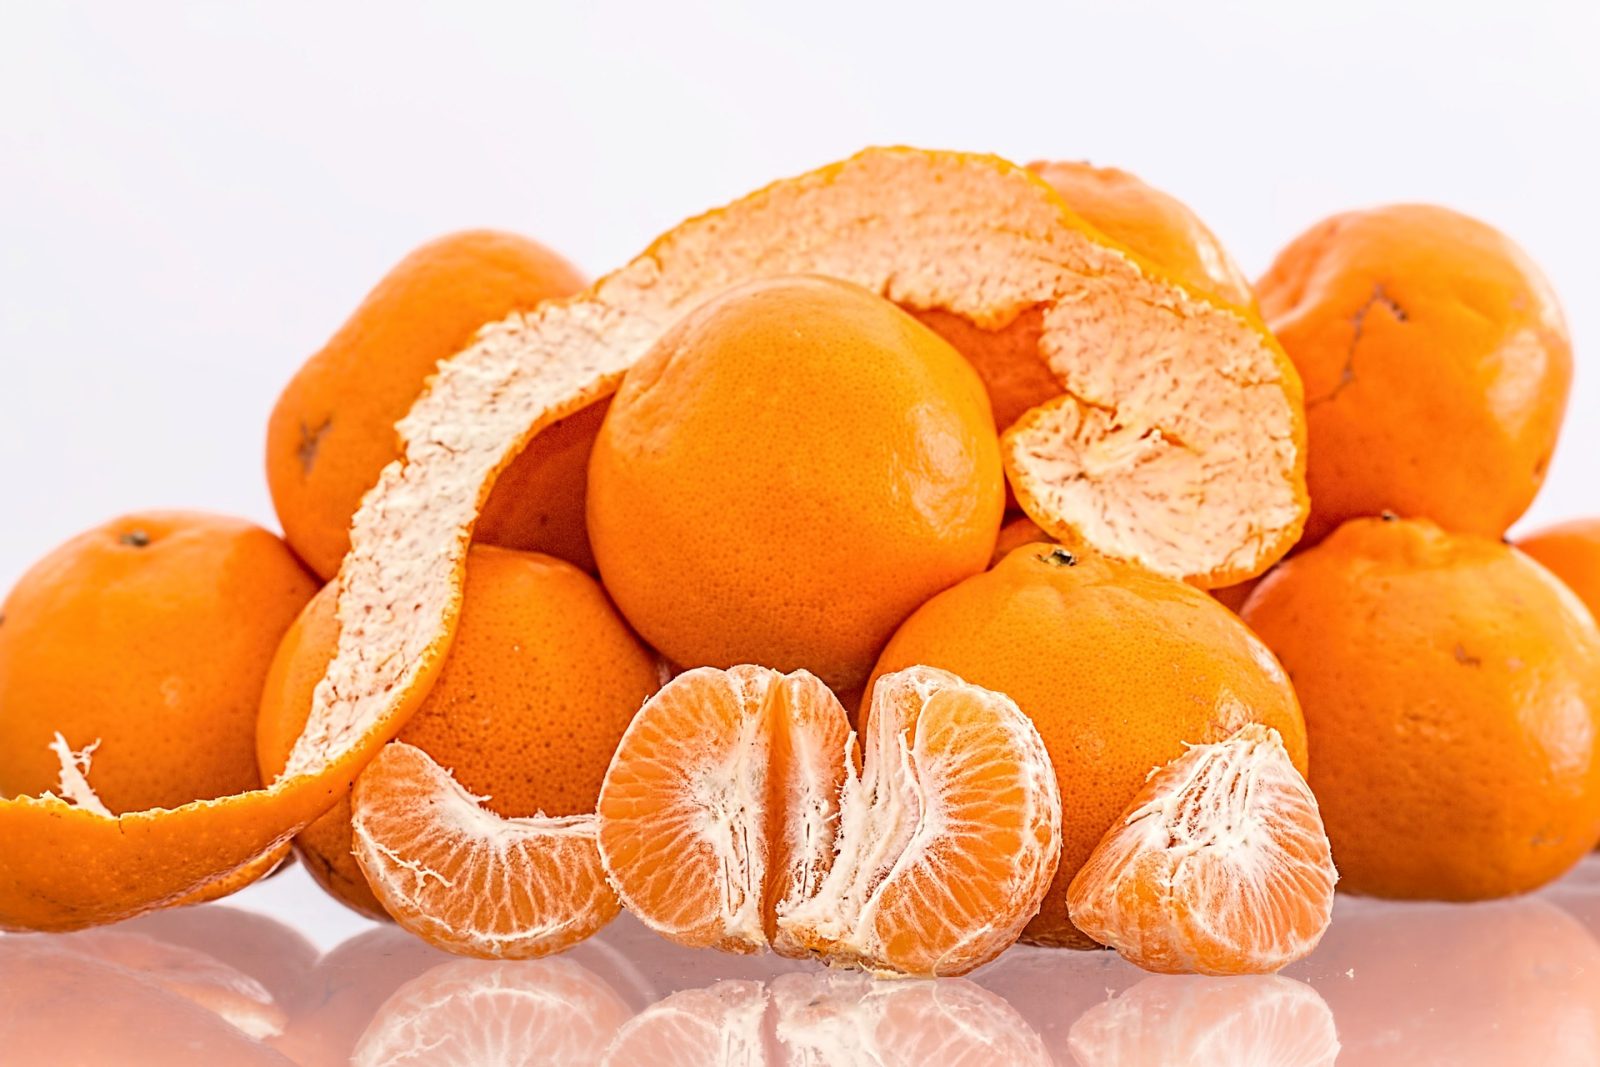 Oranges and orange peels